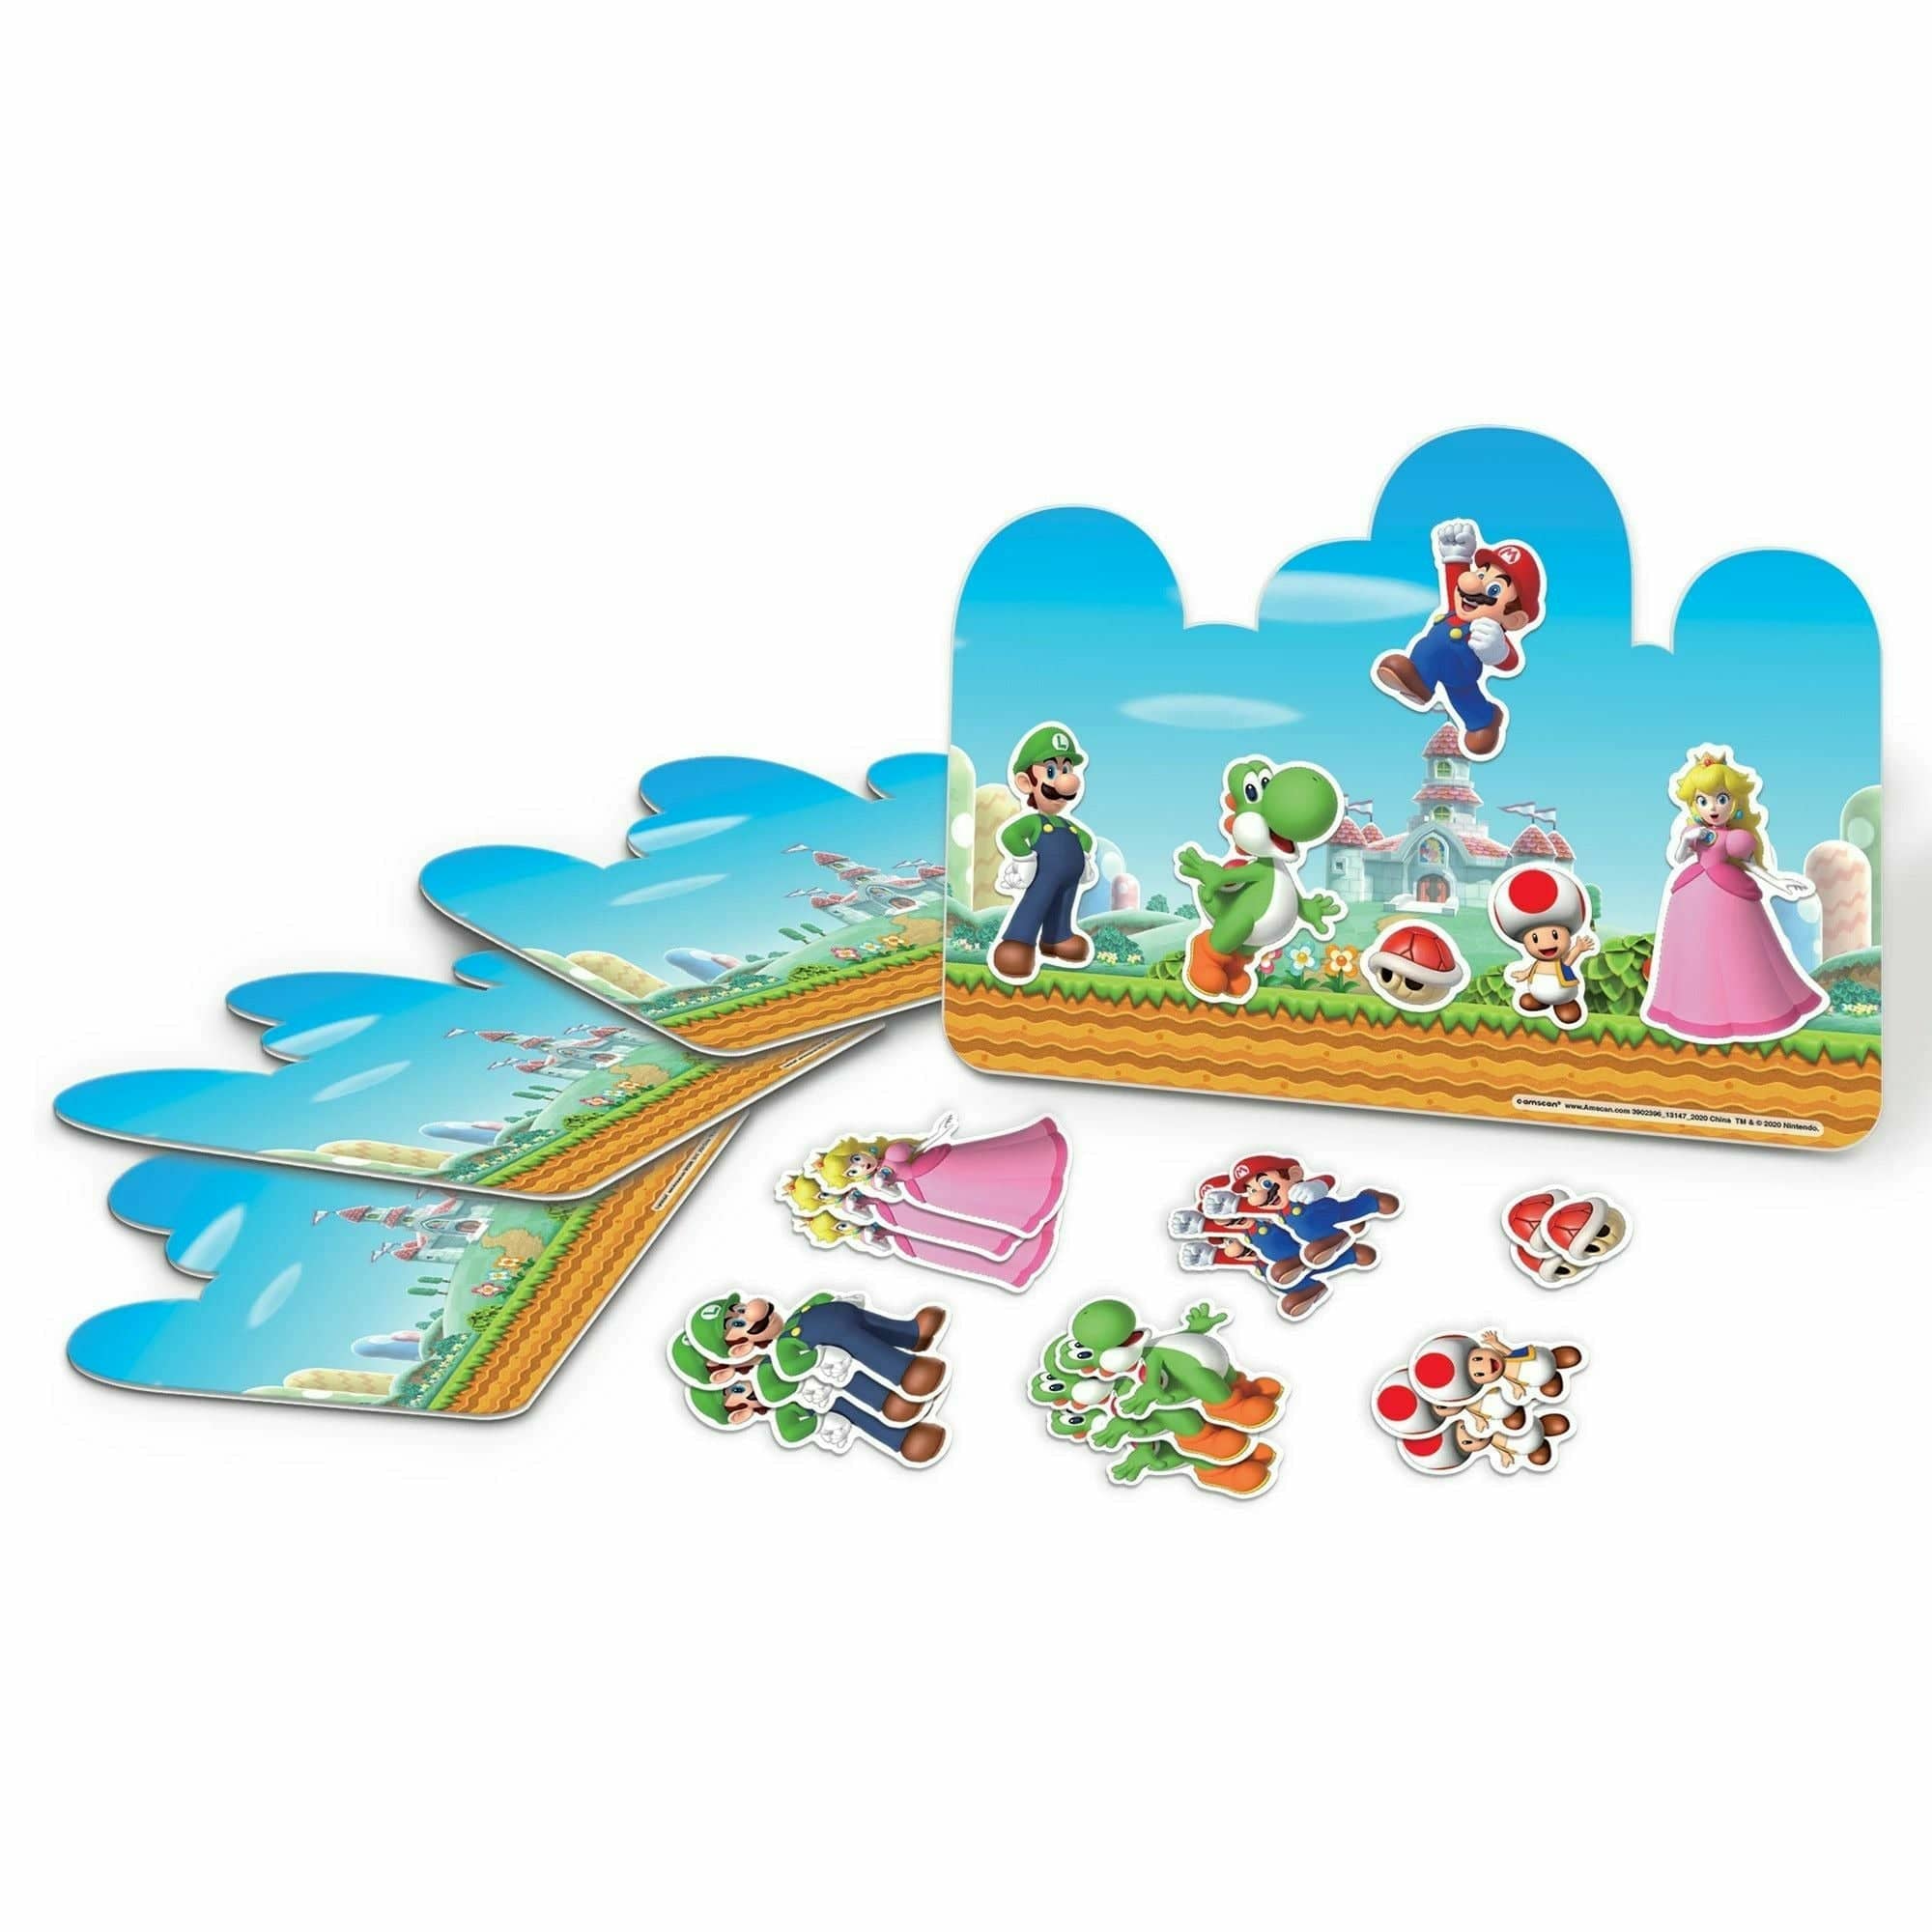 Amscan BIRTHDAY: JUVENILE Super Mario Brothers™ Craft Kit